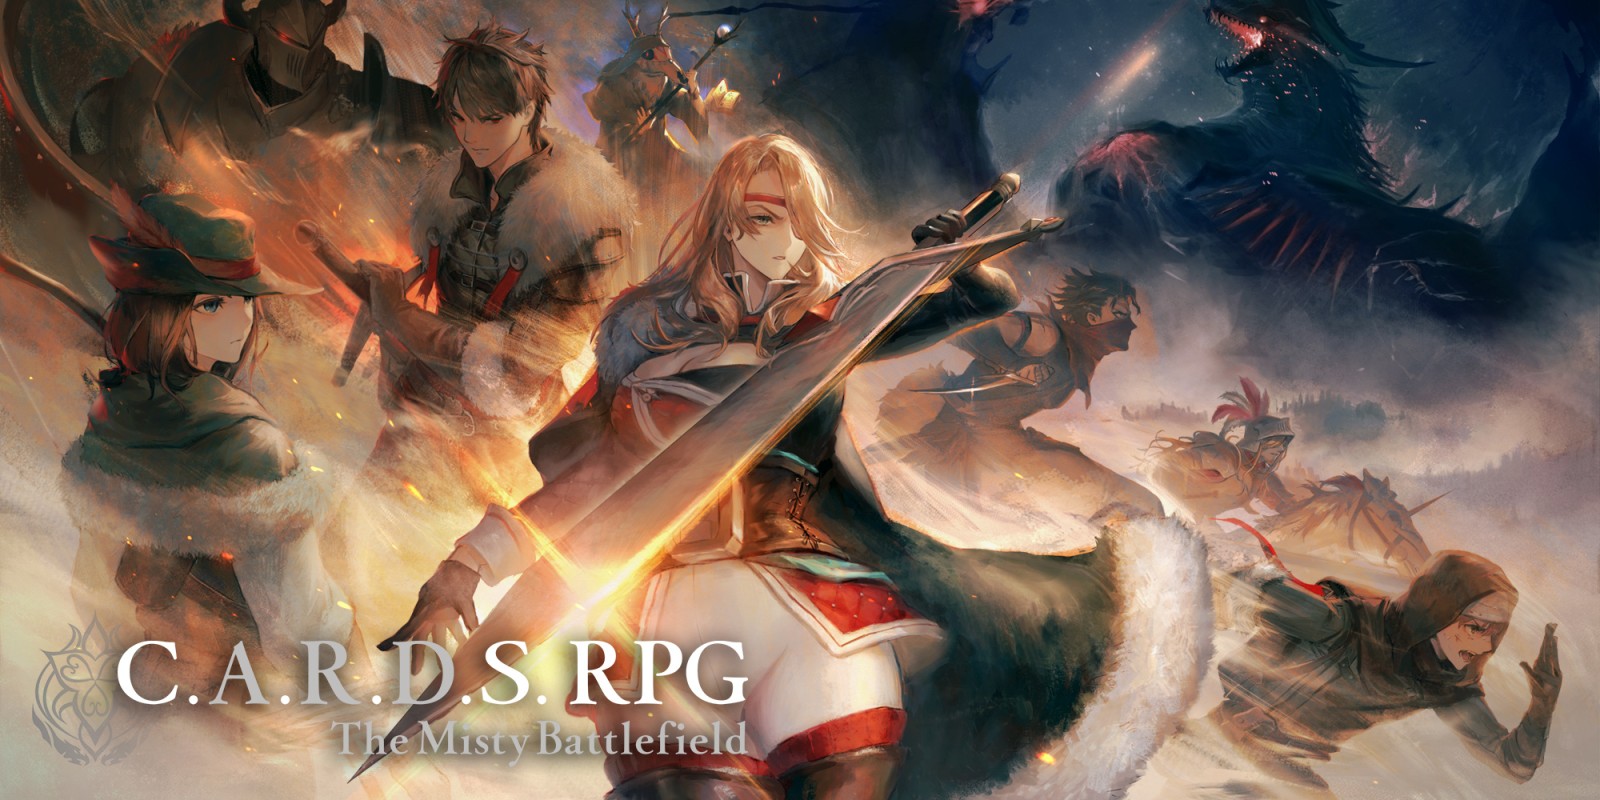 C.A.R.D.S. RPG: The Misty Battlefield trailer